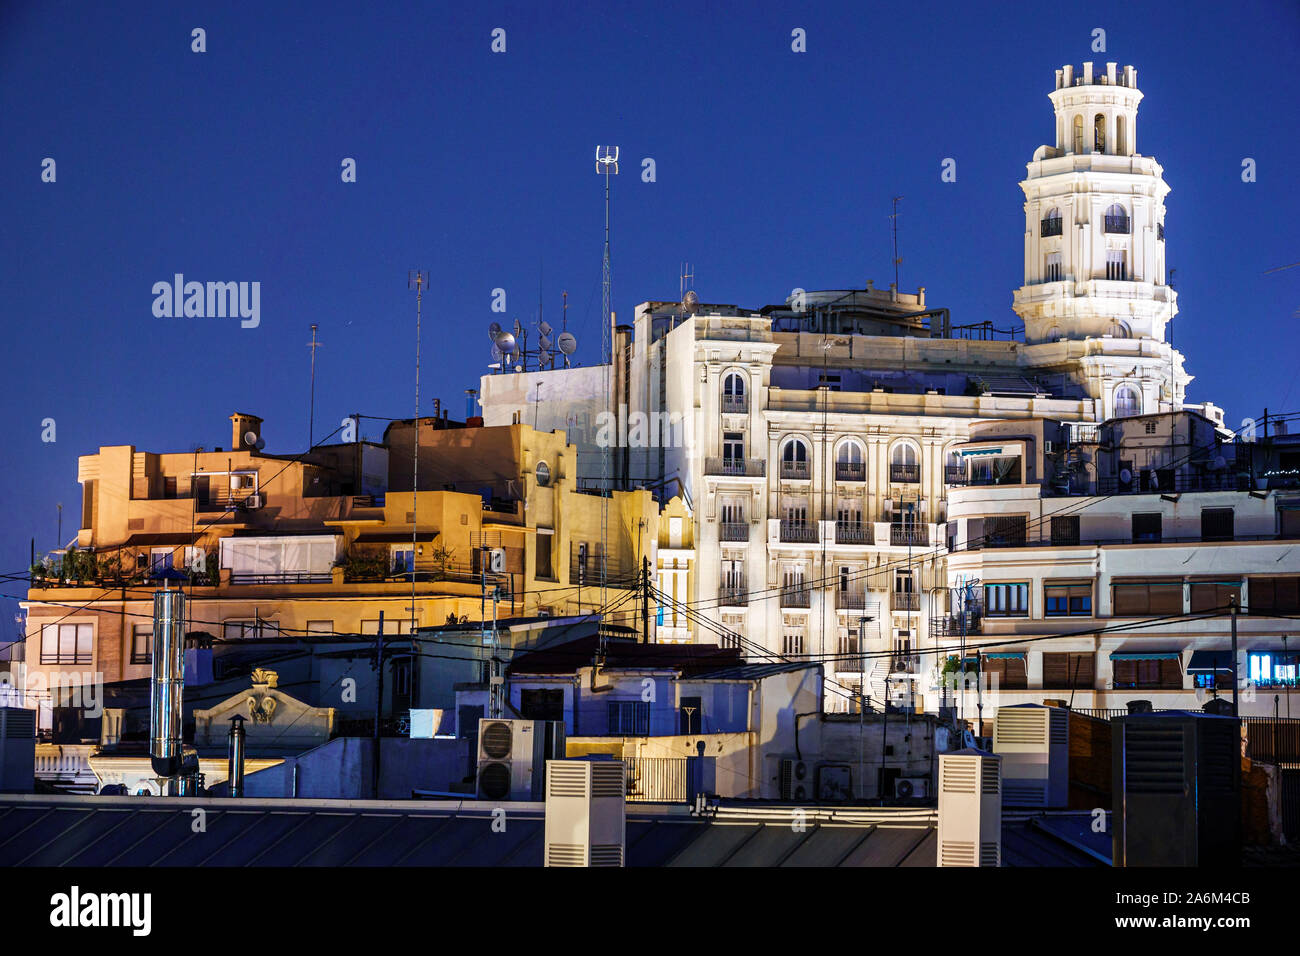 Valencia Spain Hispanic,Ciutat Vella,old city,historic district,Vincci Mercat,hotel,rooftop view,buildings,dusk,night evening,ES190828228 Stock Photo